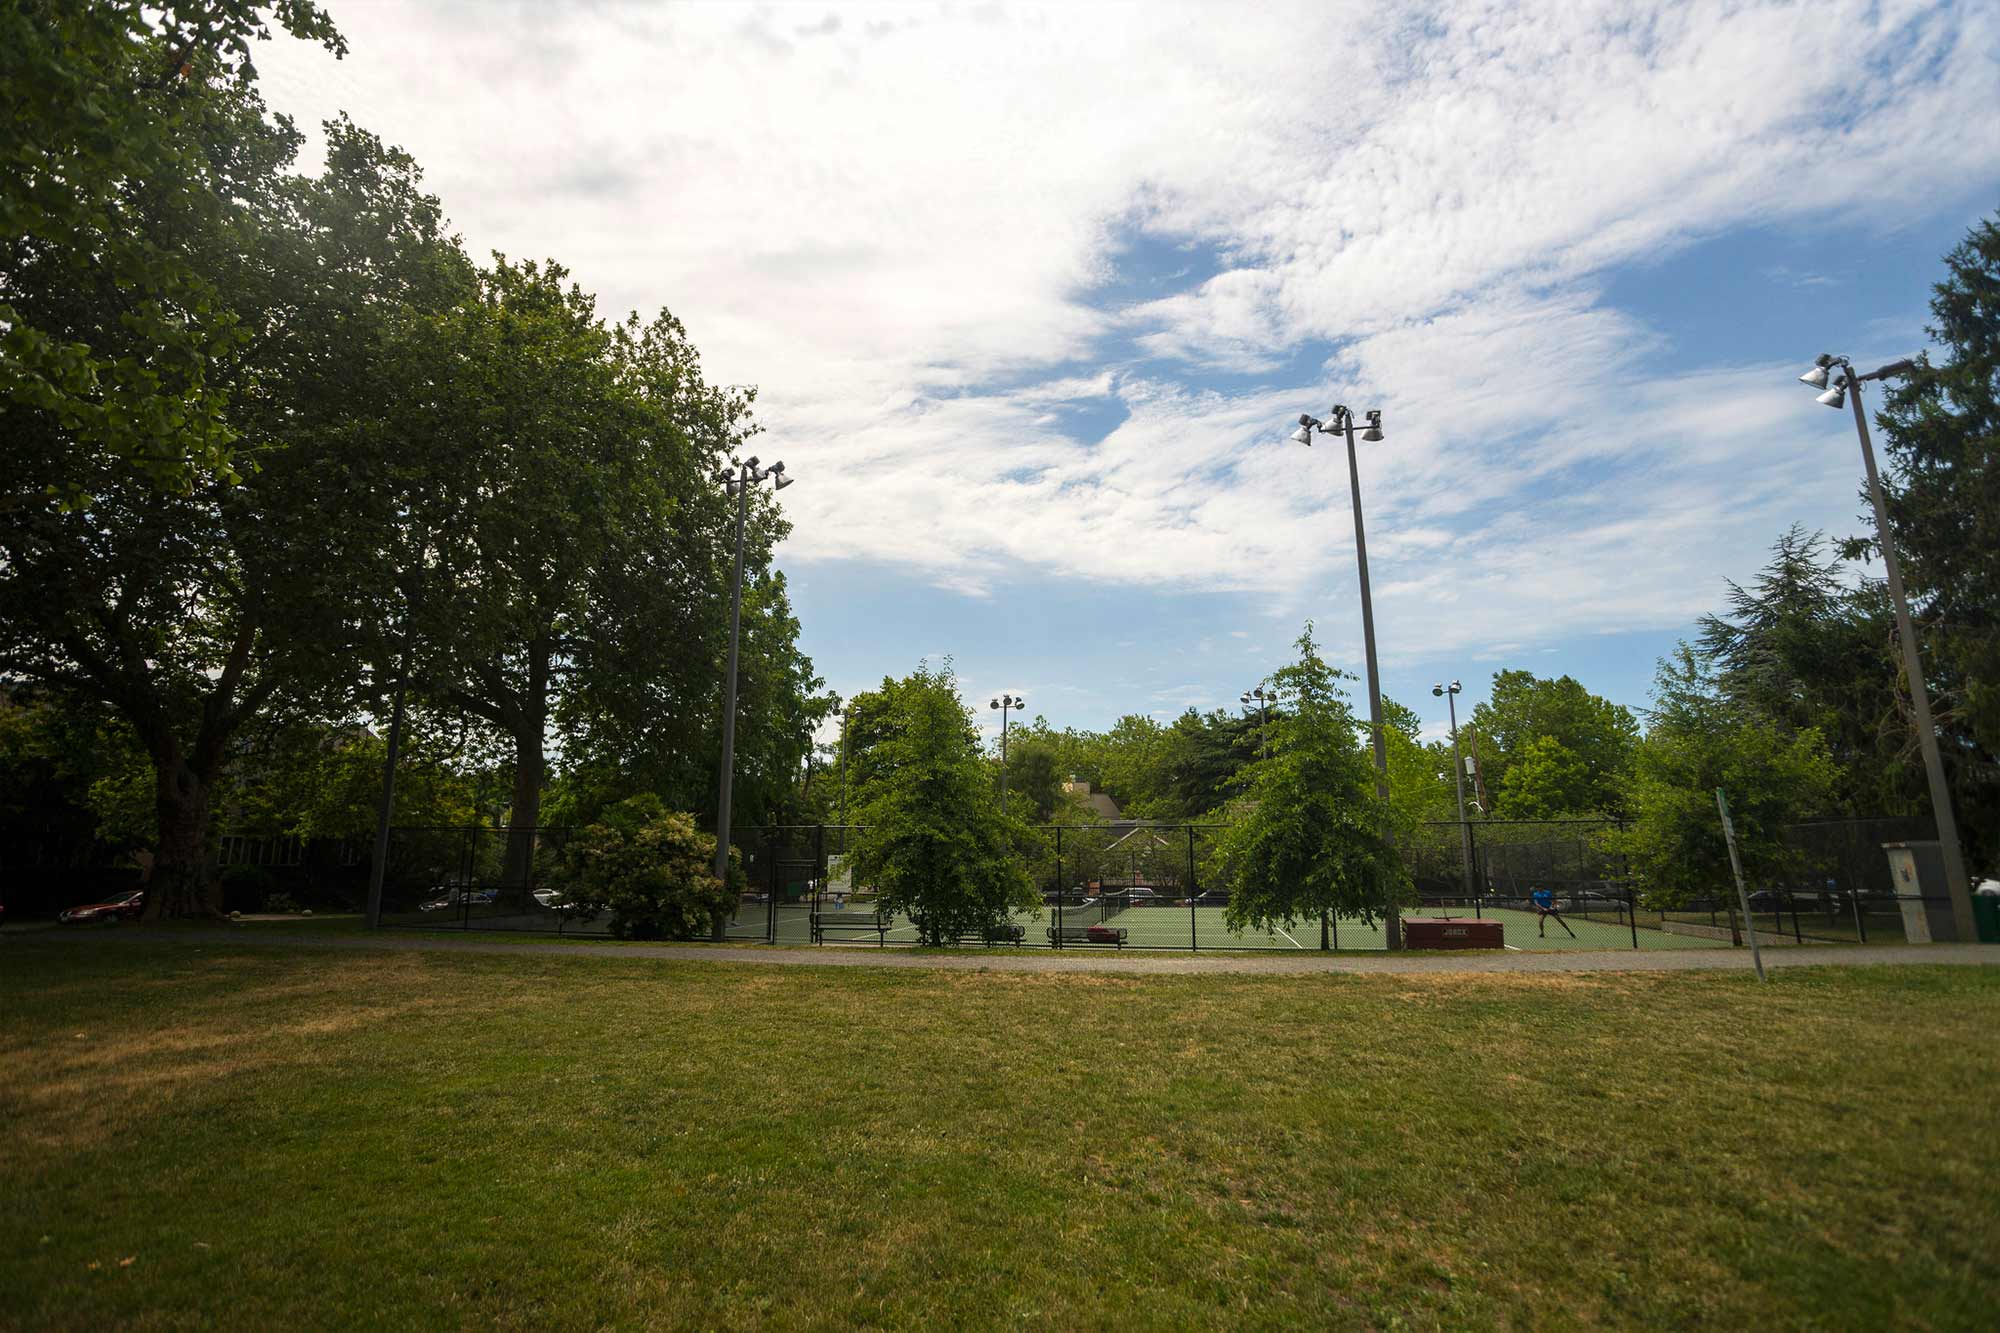 Madison Park - Parks | seattle.gov